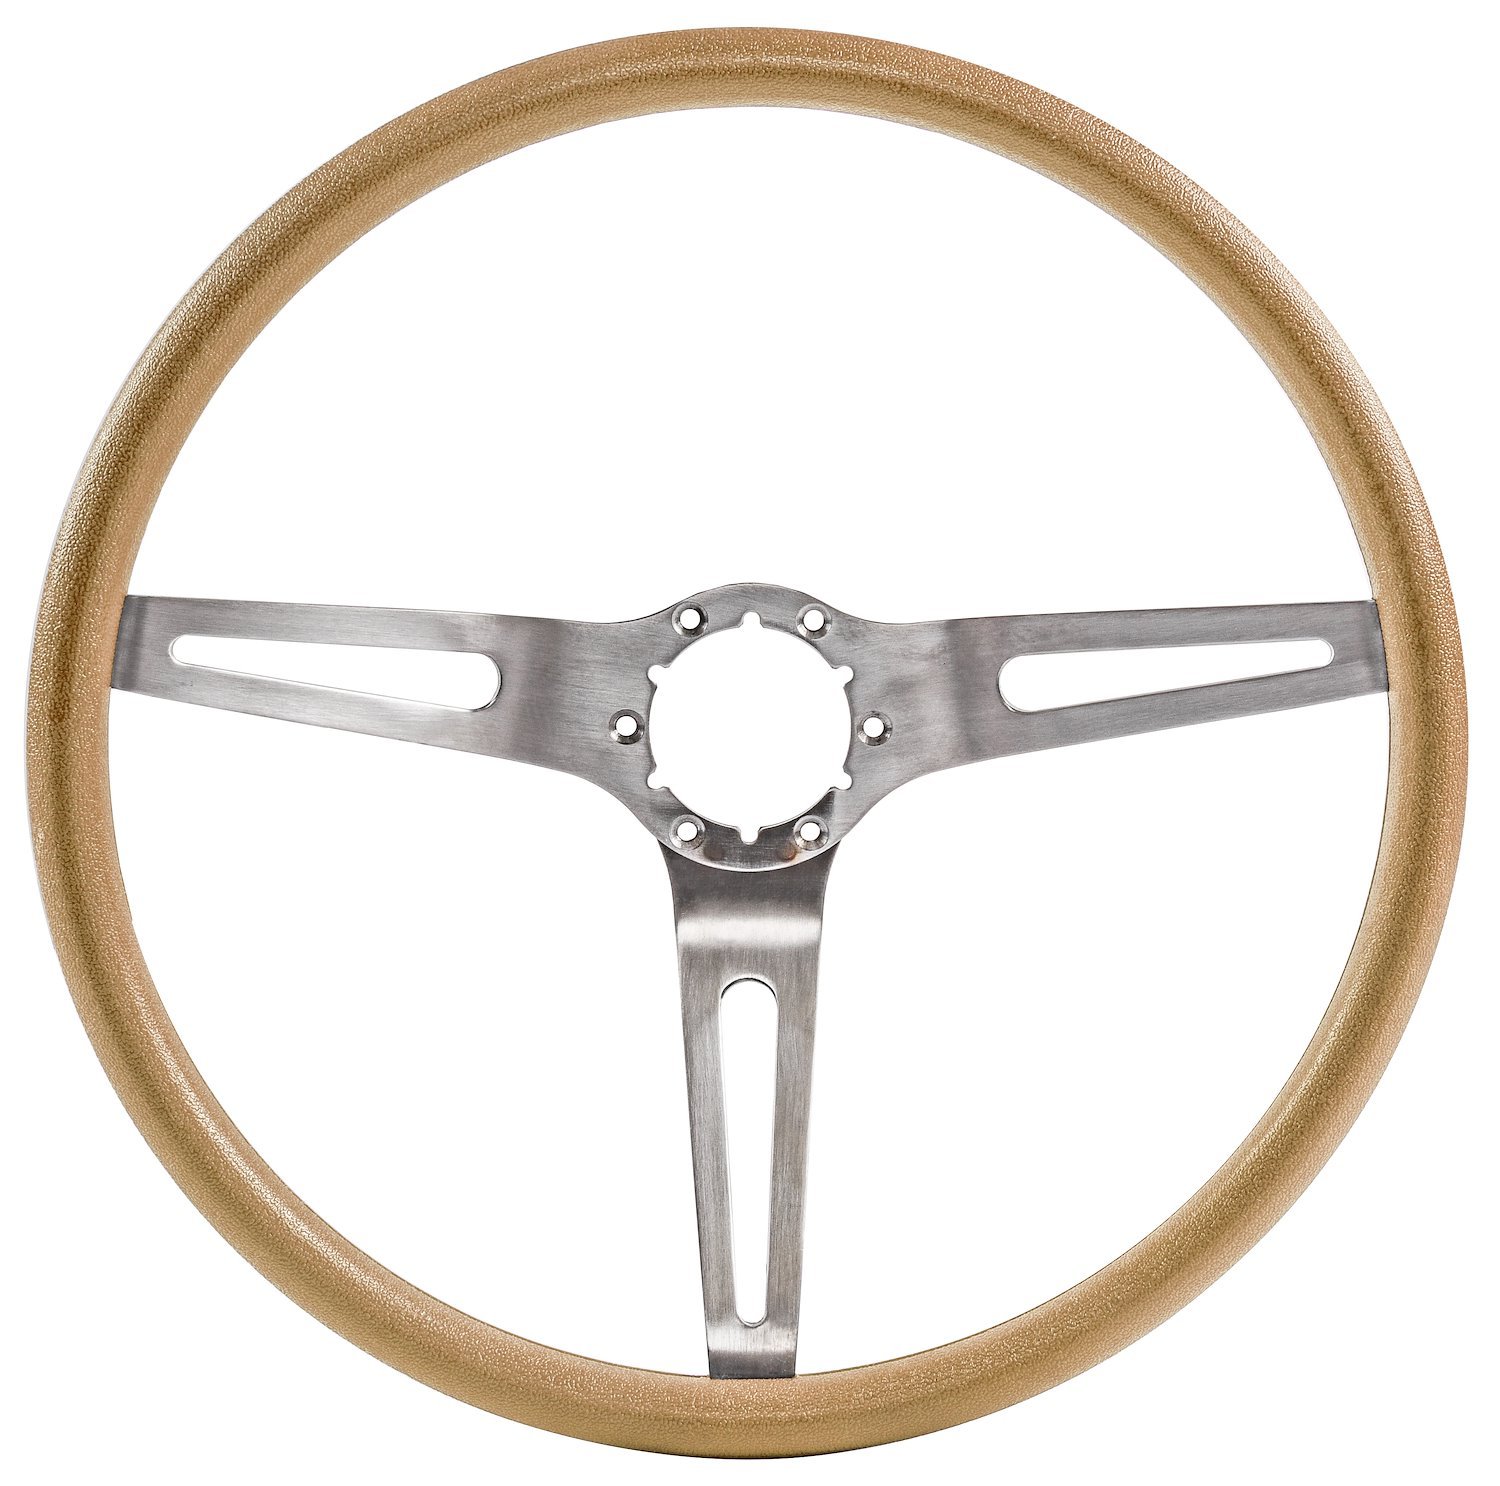 3-Spoke Comfort Grip Steering Wheel Fits Select 1967-1972 Chevrolet Cars & 1960-1975 Chevrolet & GMC Trucks [Saddle Grip]